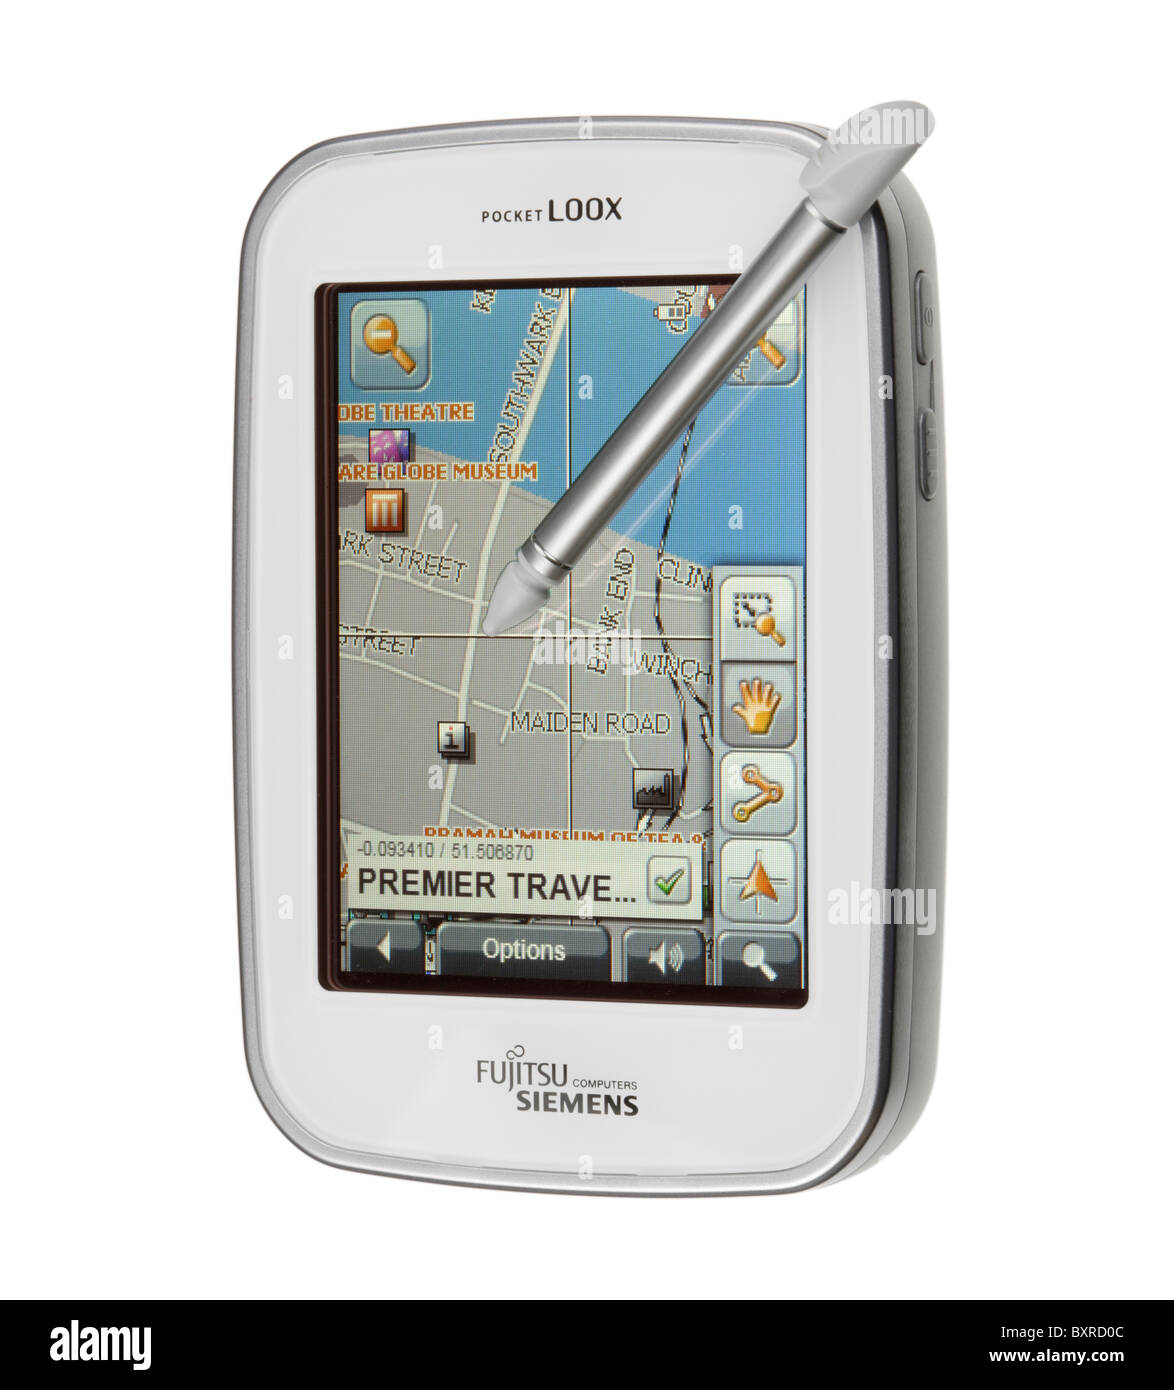 Fujitsu Siemens Pocket Loox GPS-Gerät Stockfoto